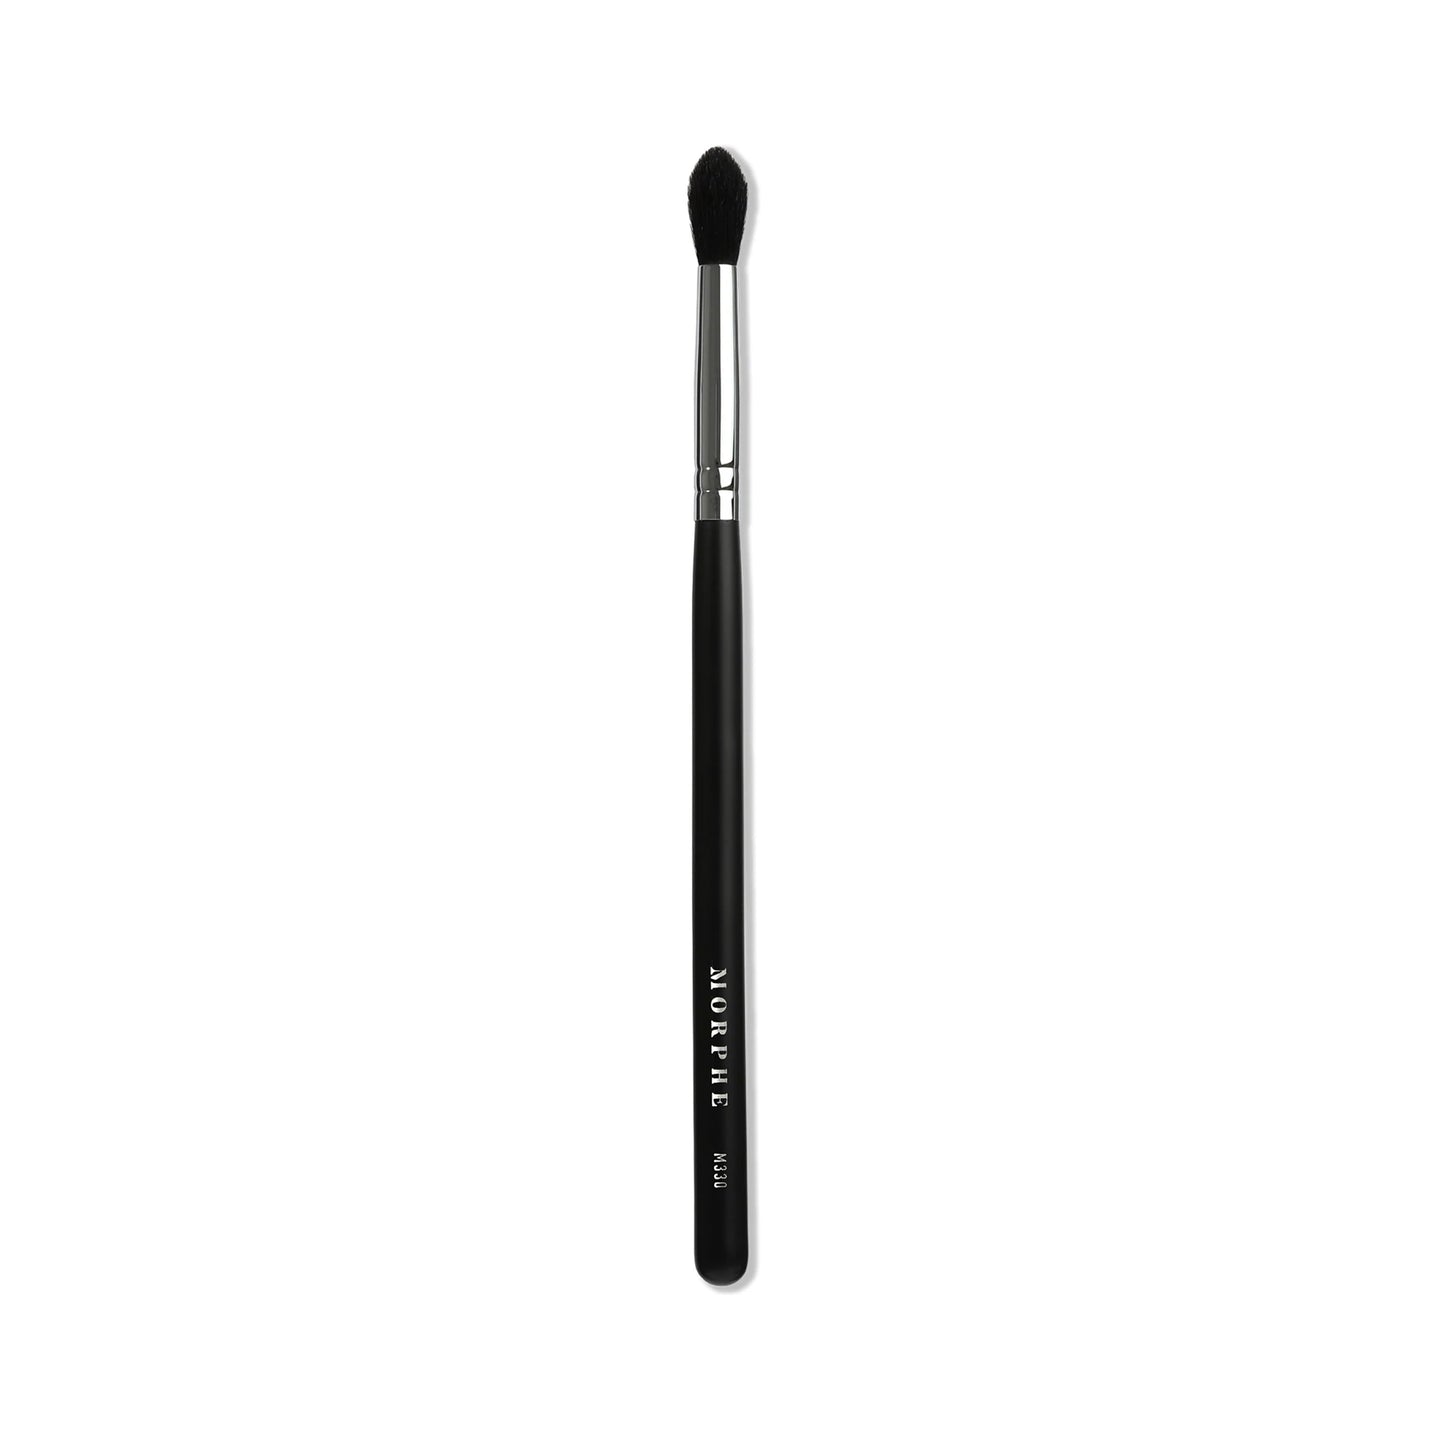 Morphe Cosmetics M330 Blending Crease Eeyeshadow Brush